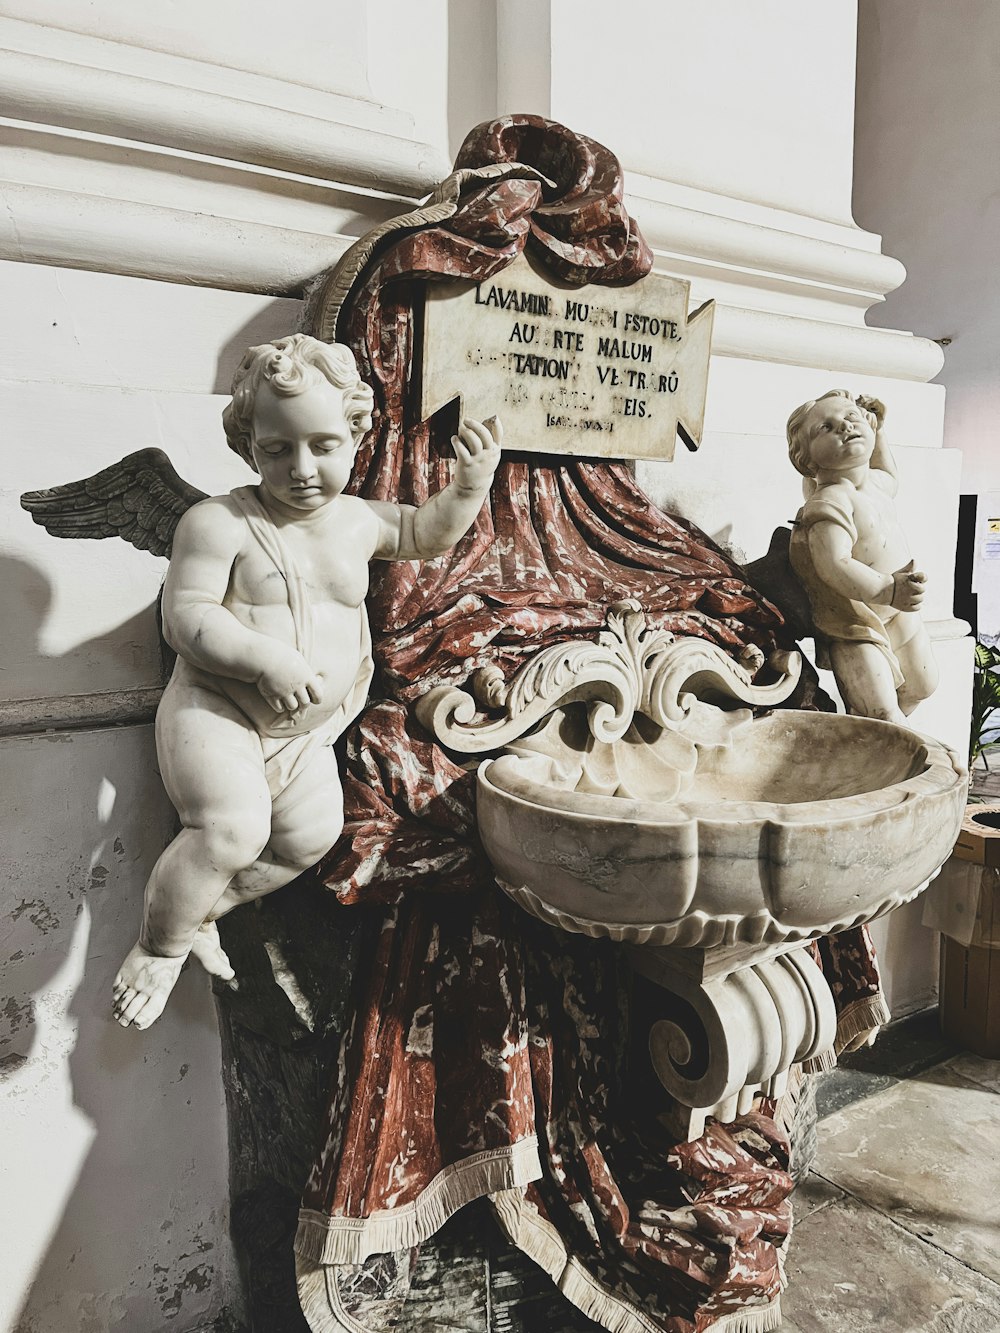 a statue of a cherub sitting next to a fountain